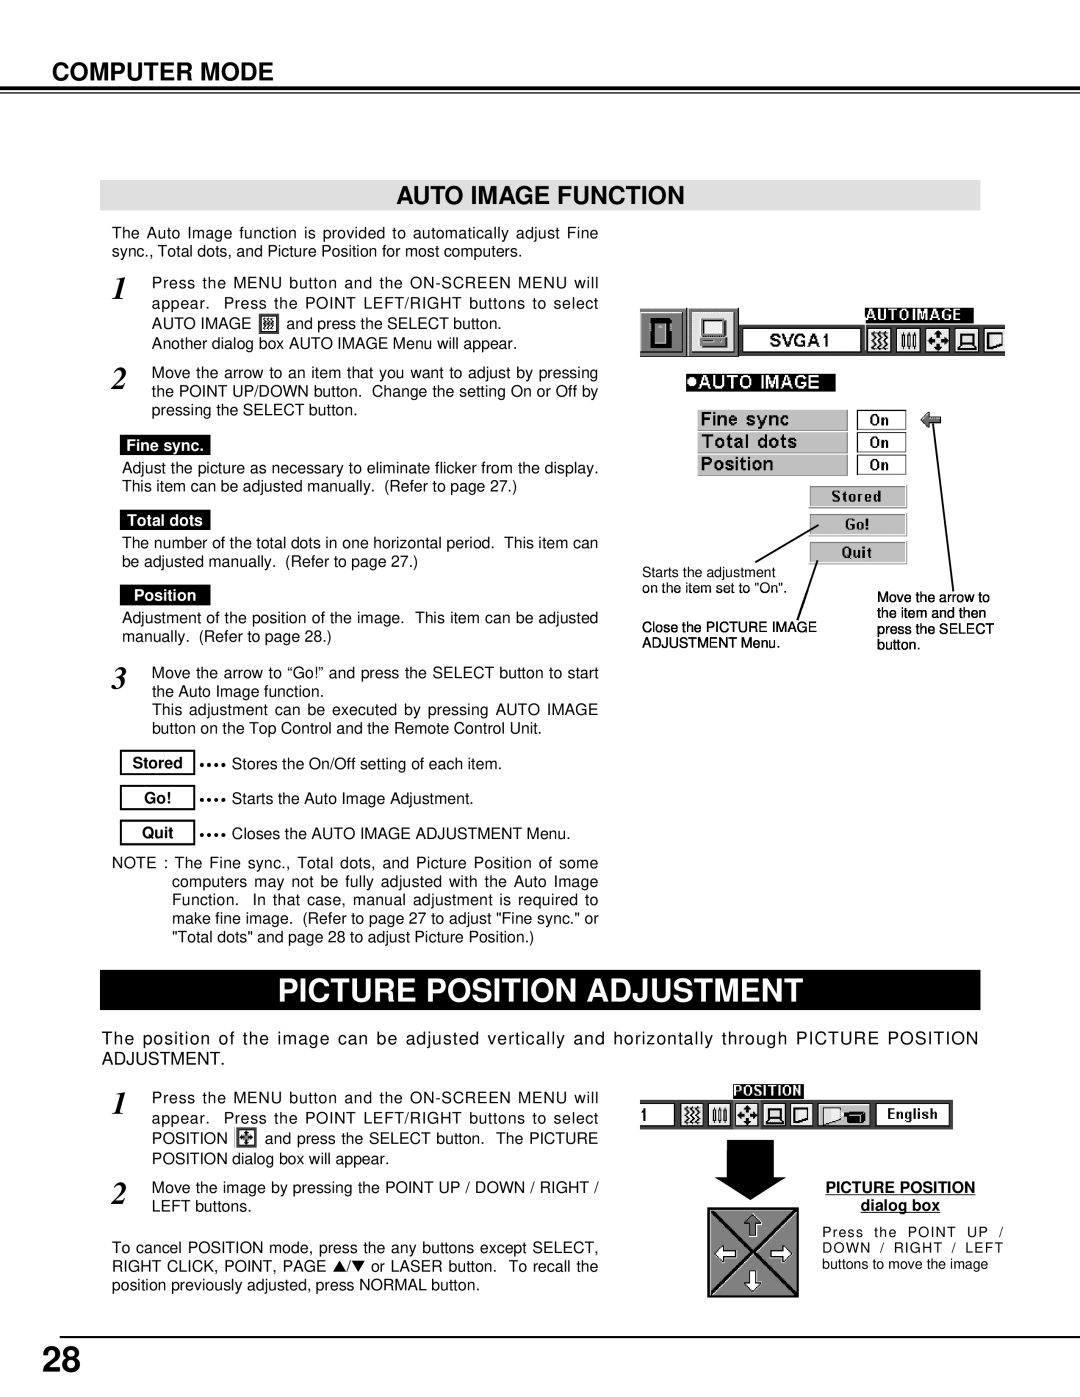 BOXLIGHT CP-33t manual Picture Position Adjustment, Computer Mode Auto Image Function, Fine sync, Total dots, Quit 